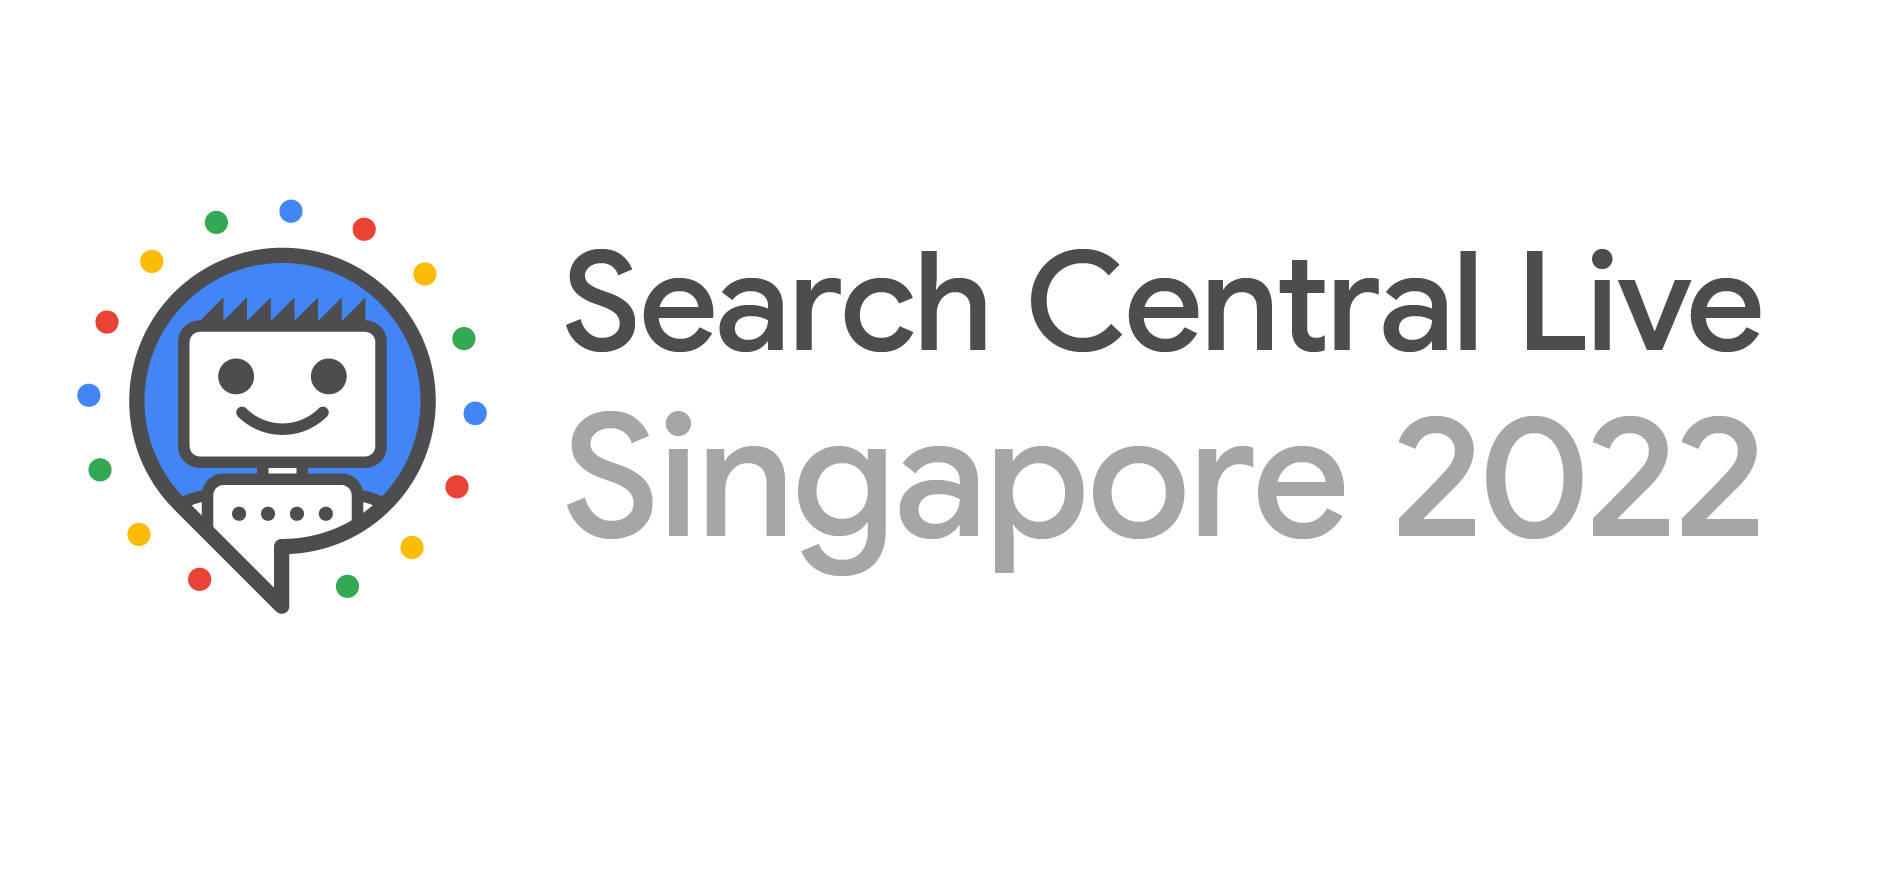 Biểu tượng của Search Central Live Singapore 2022